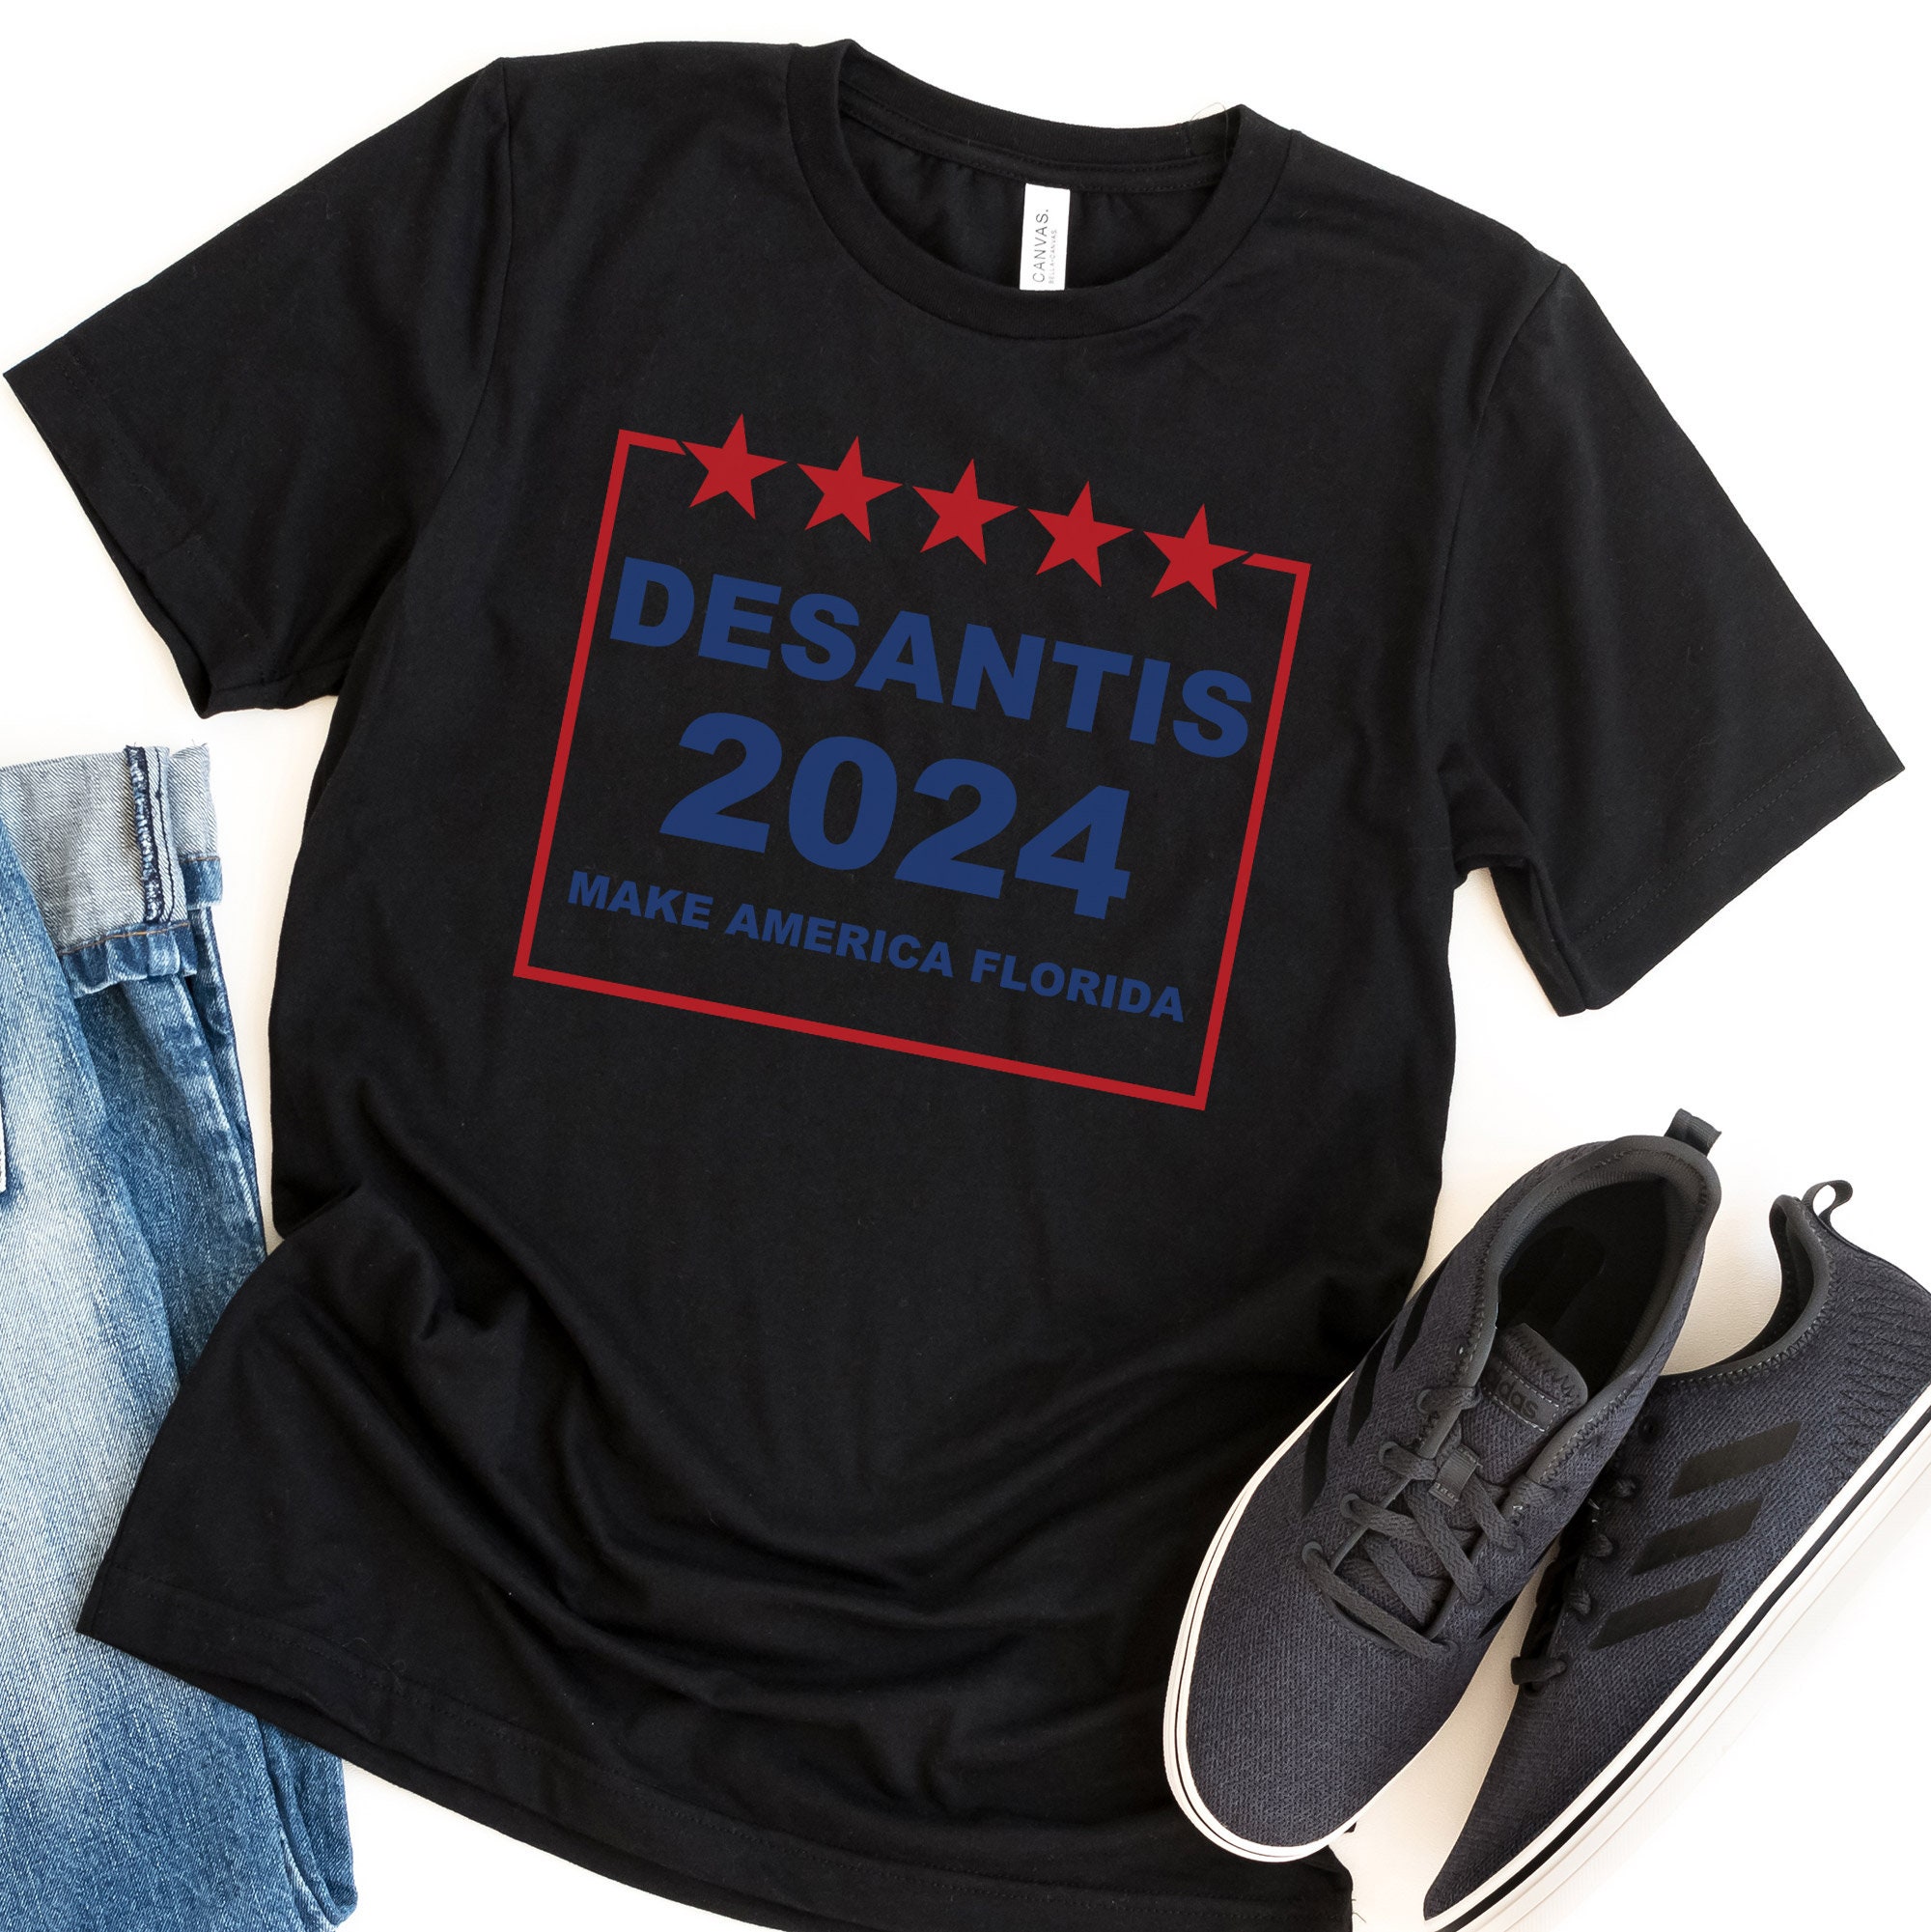 DeSantis 2024, Conservative Tee, Republican T-Shirt